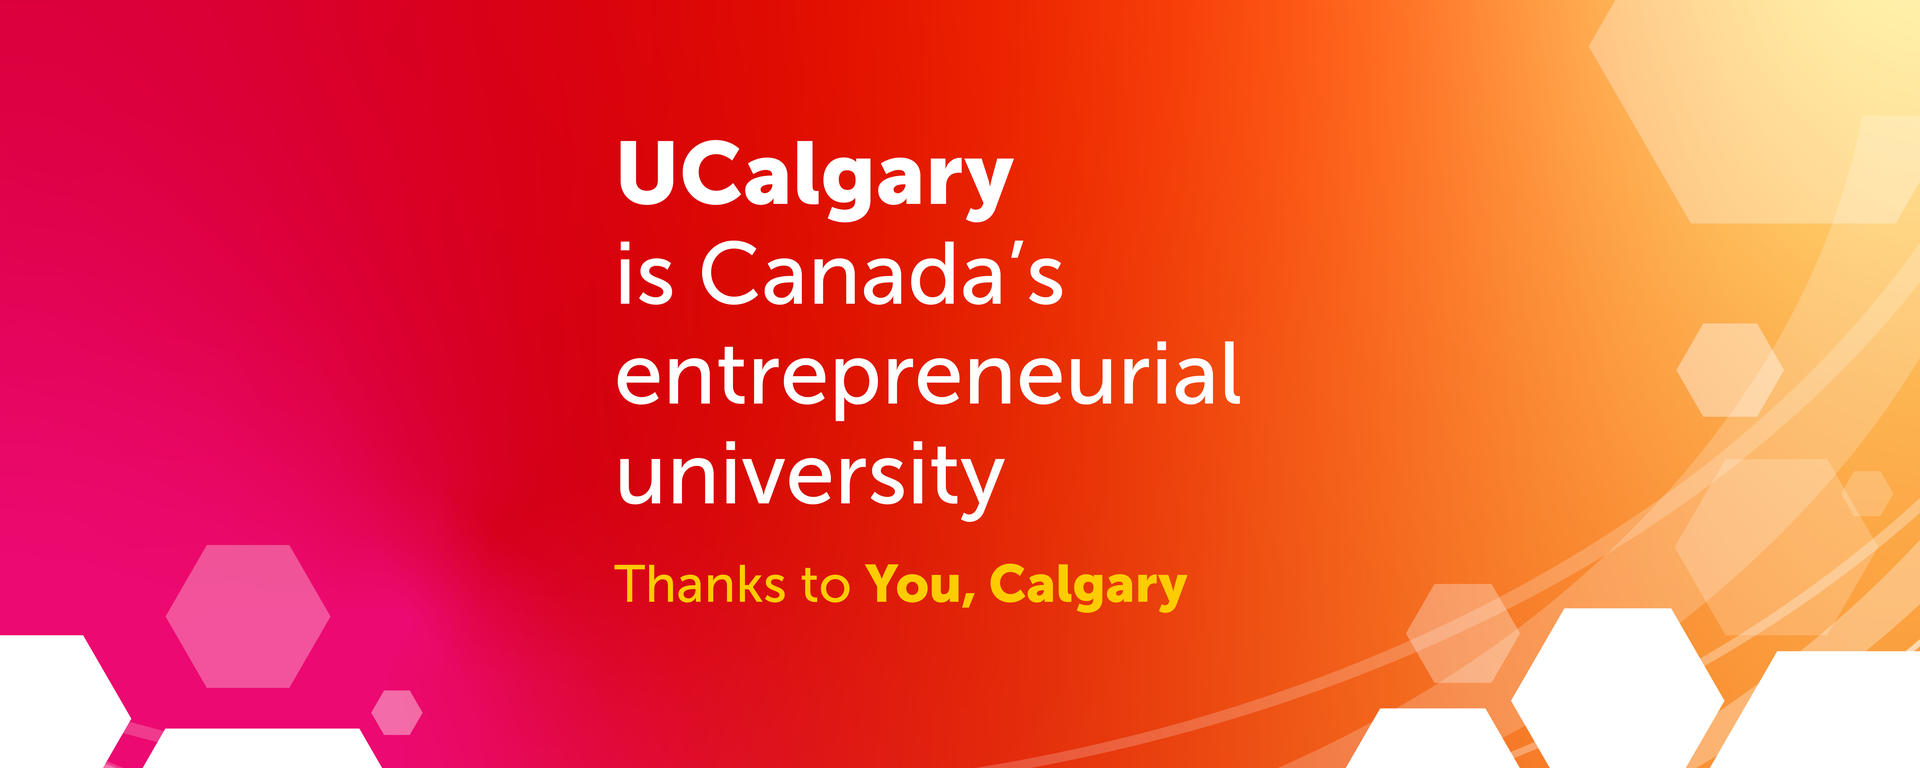 UCalgary is Canada's entrepreneurial university. Thanks to You, Calgary.